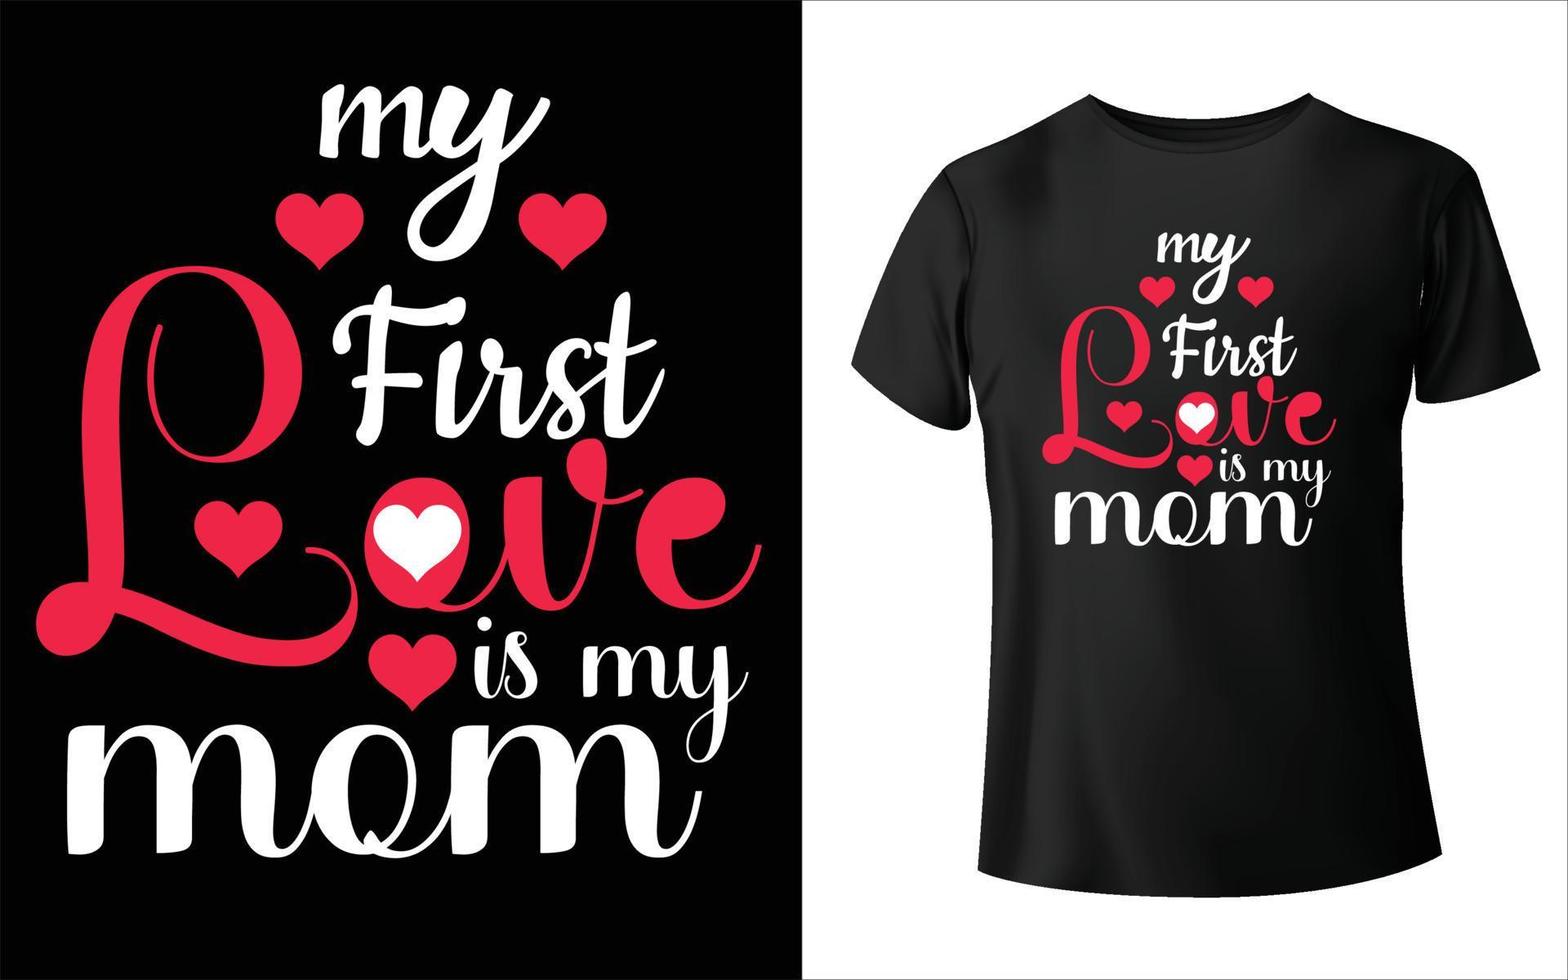 design de camiseta feliz dia das mães, vetor mãe, design de camiseta dia das mães, vetor mãe,